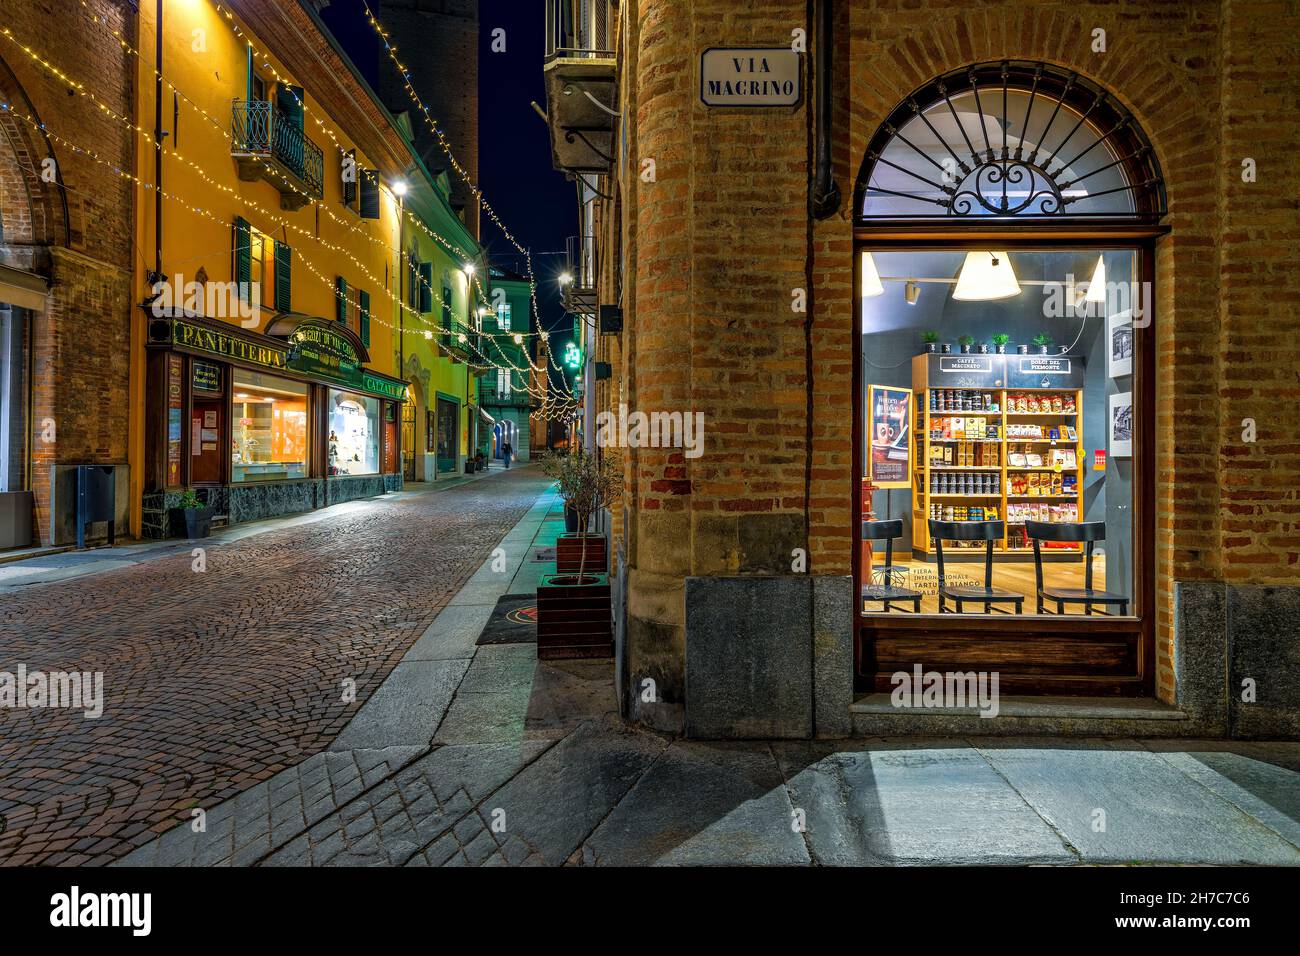 Illuminated window of the coffe shop and narrow cobblestone street with Christmas illumination among historic buildings in Alba, Italy. Stock Photo